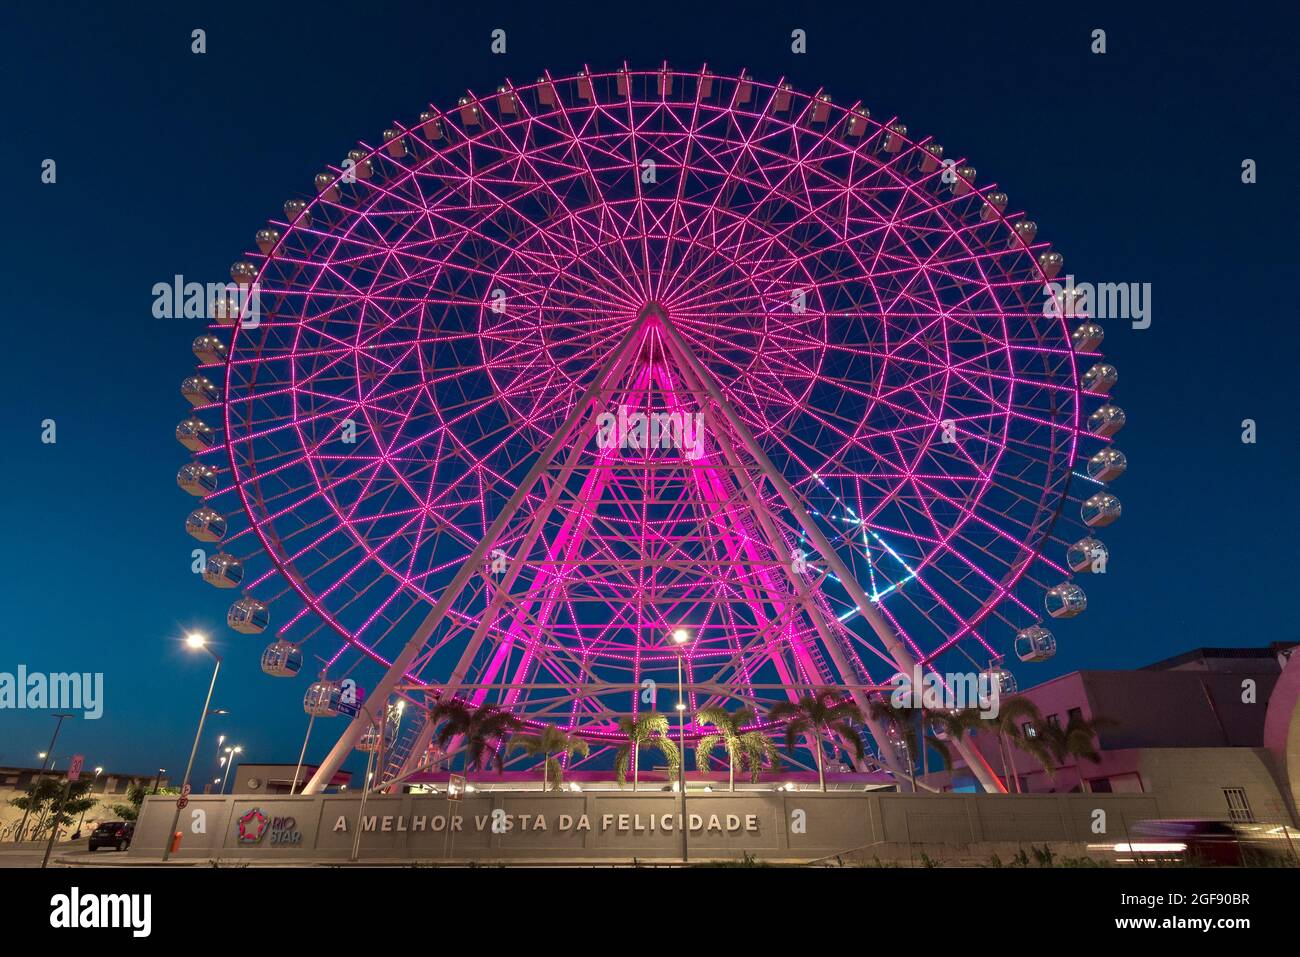 Rio de Janeiro, Brazil - January 18, 2021: Rio Star ferris wheel at night is illuminated with colorful RGB led lights. Stock Photo